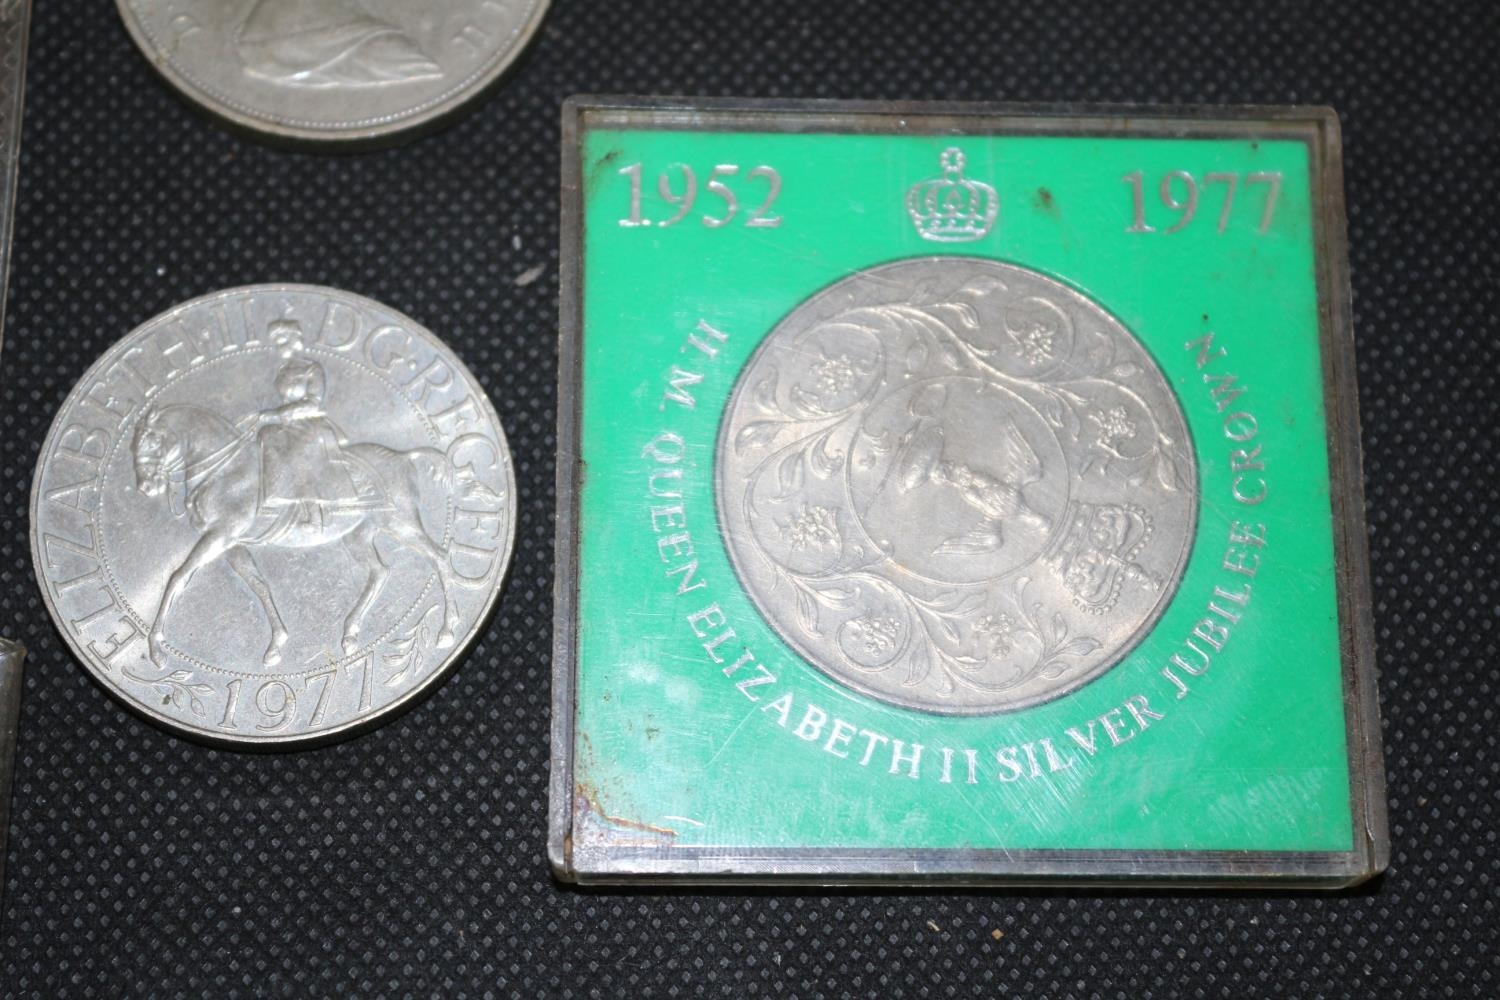 6 Assortments of Commemorative Coins